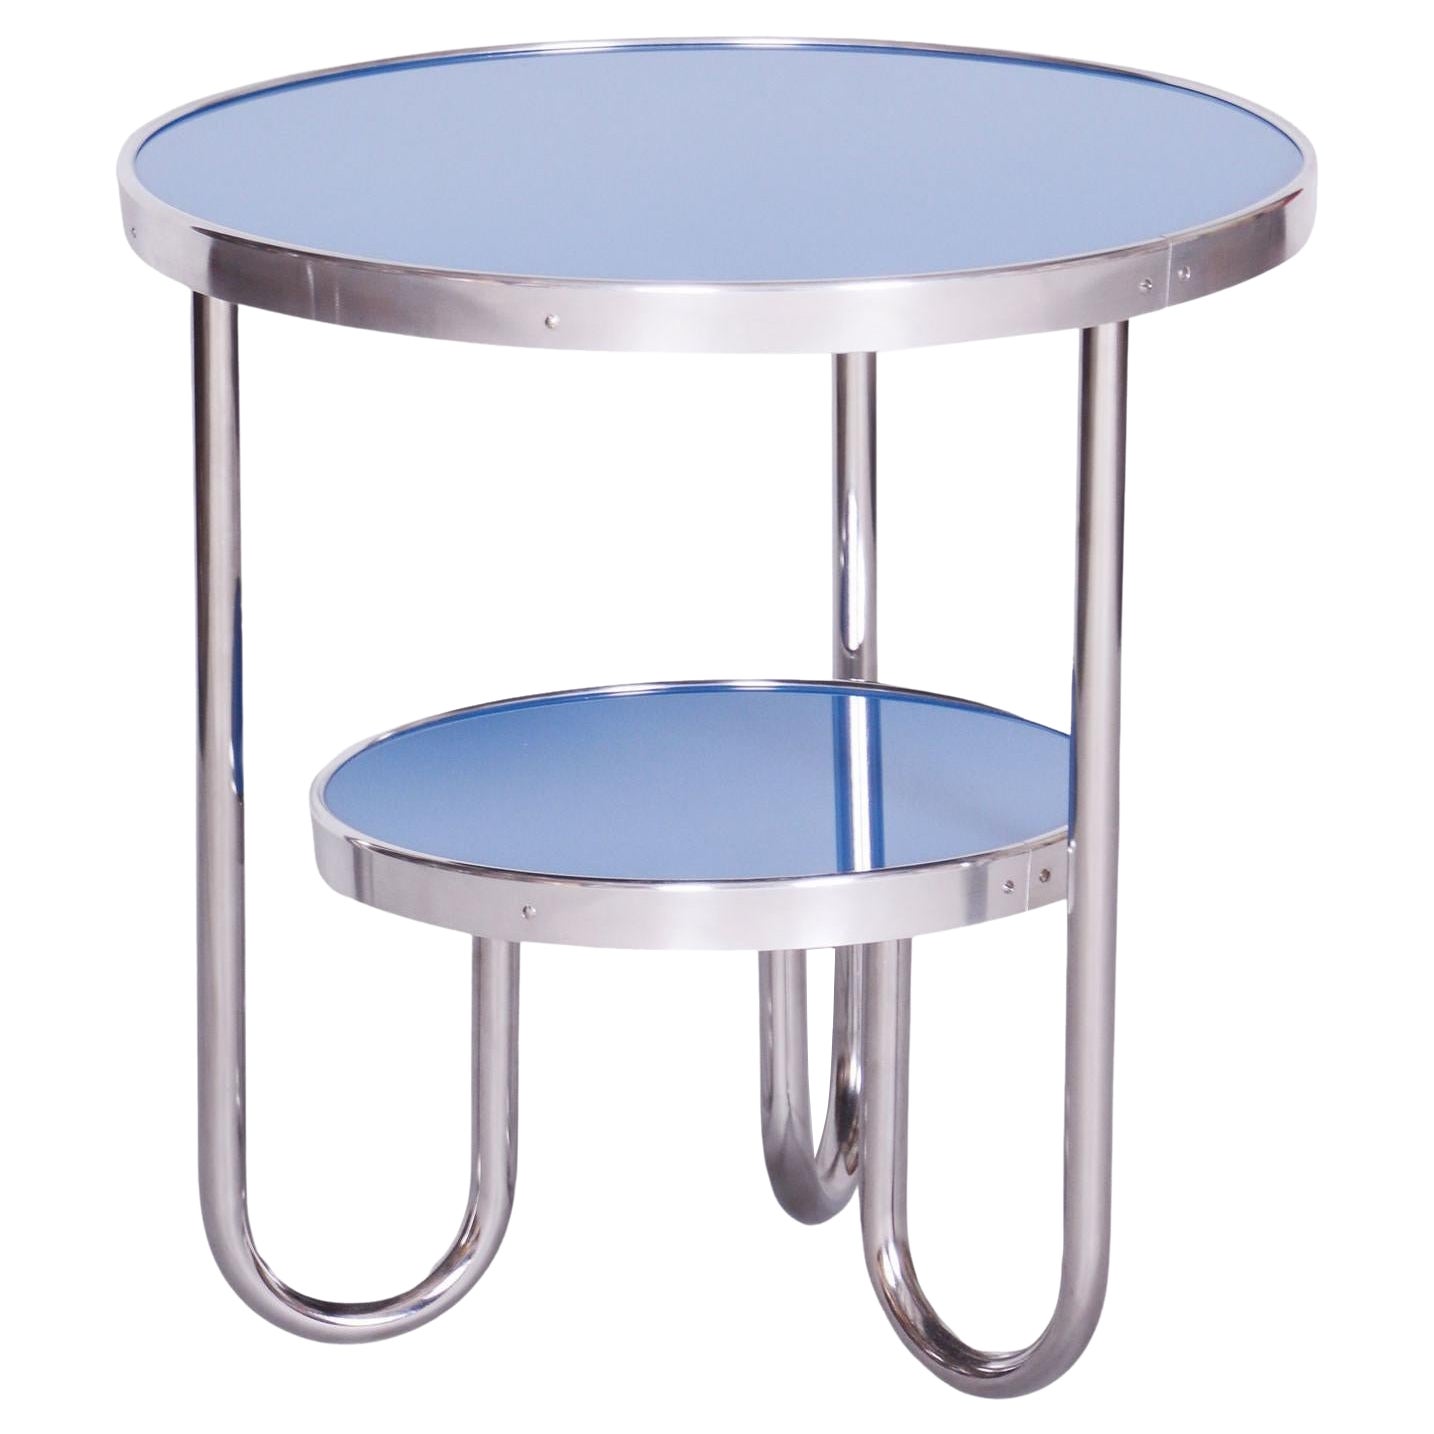 Restored Bauhaus Small Blue Table, Kovona, Chrome, Czechia, 1930s For Sale